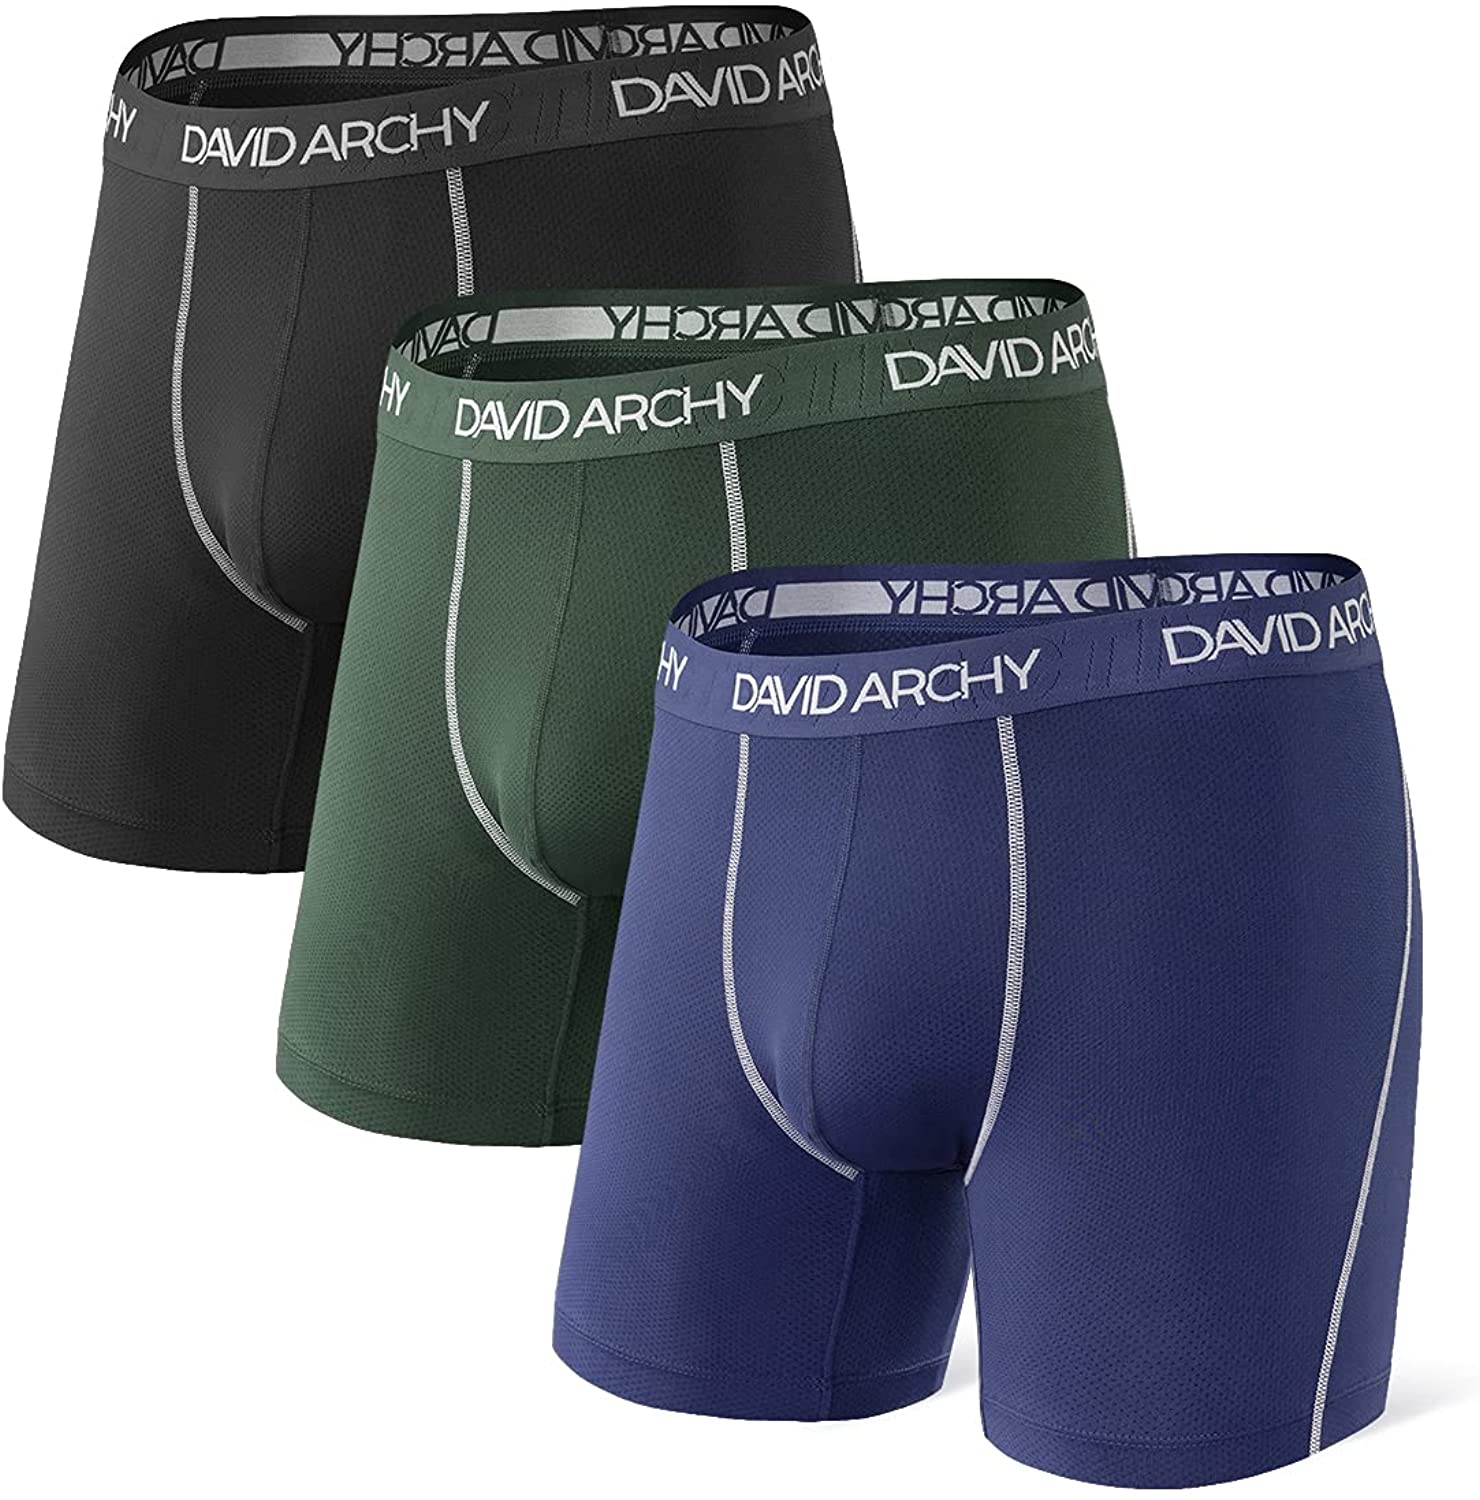 DAVID ARCHY 3 Pack Men's Ultra Soft Mesh Quick Dry Sports